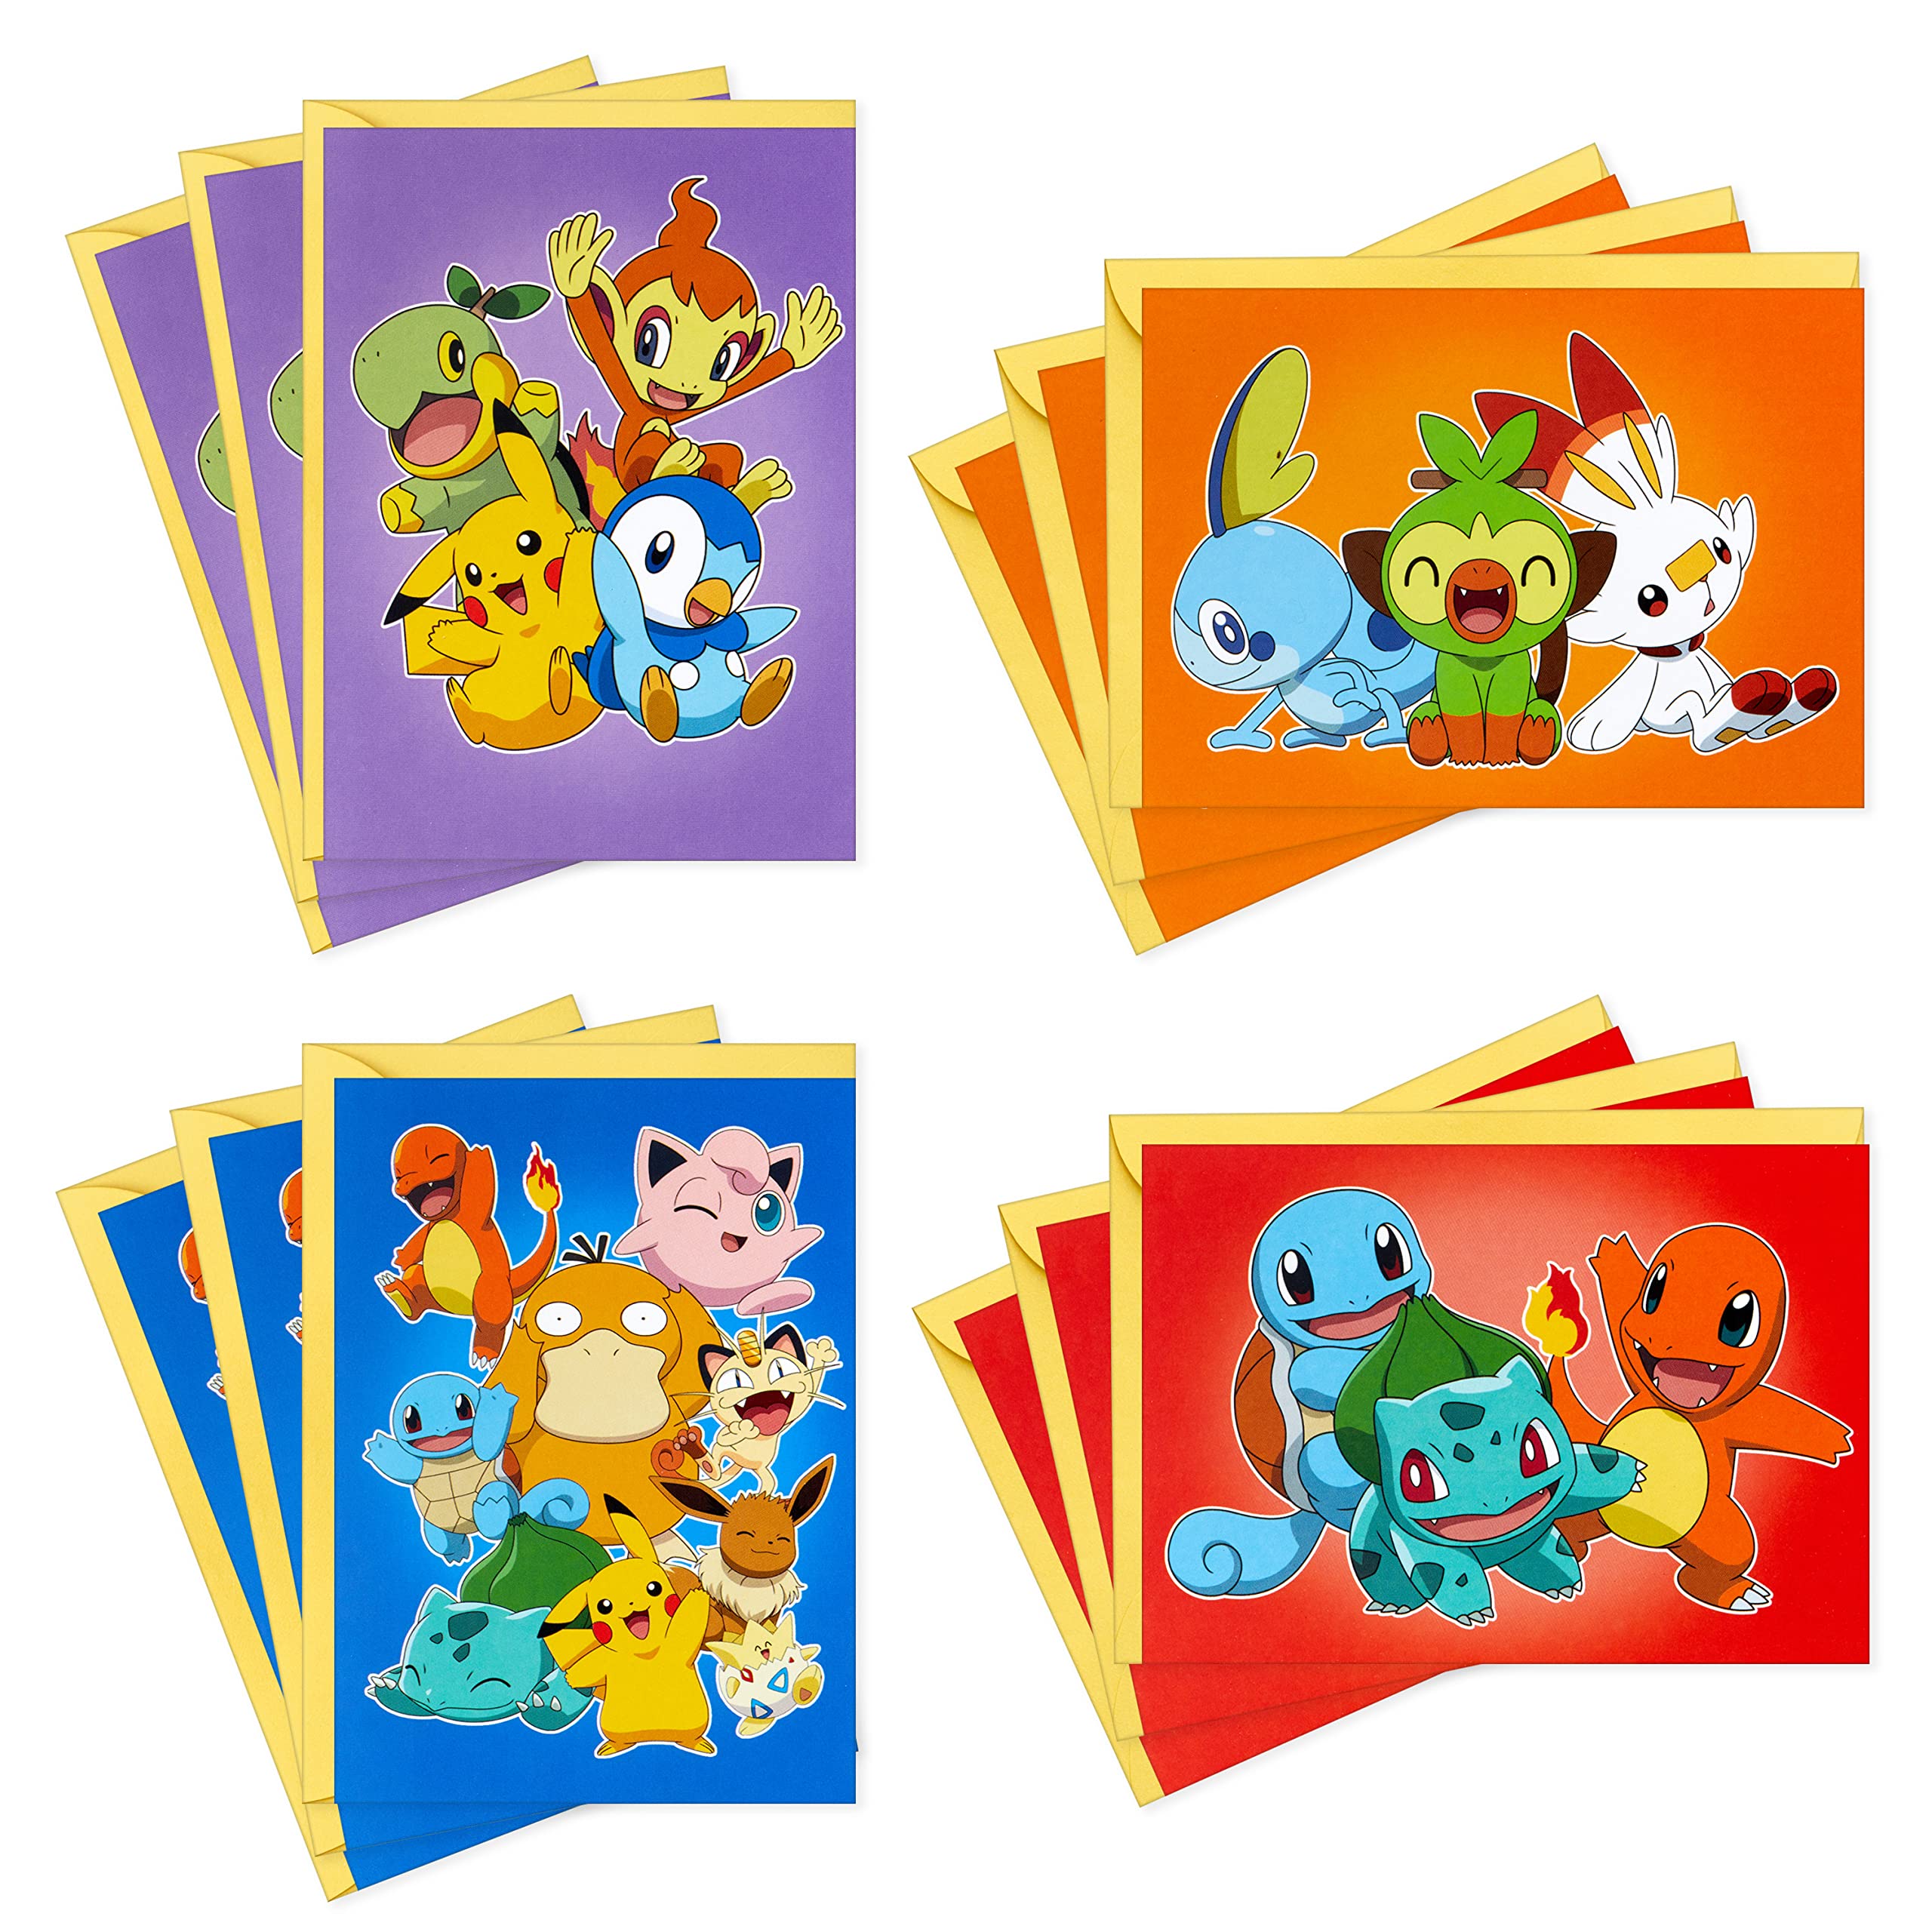 Hallmark Kids Pokémon All Occasion Cards Assortment, 12 Blank Cards with Envelopes (Pikachu, Bulbasaur, Charmander, Squirtle)